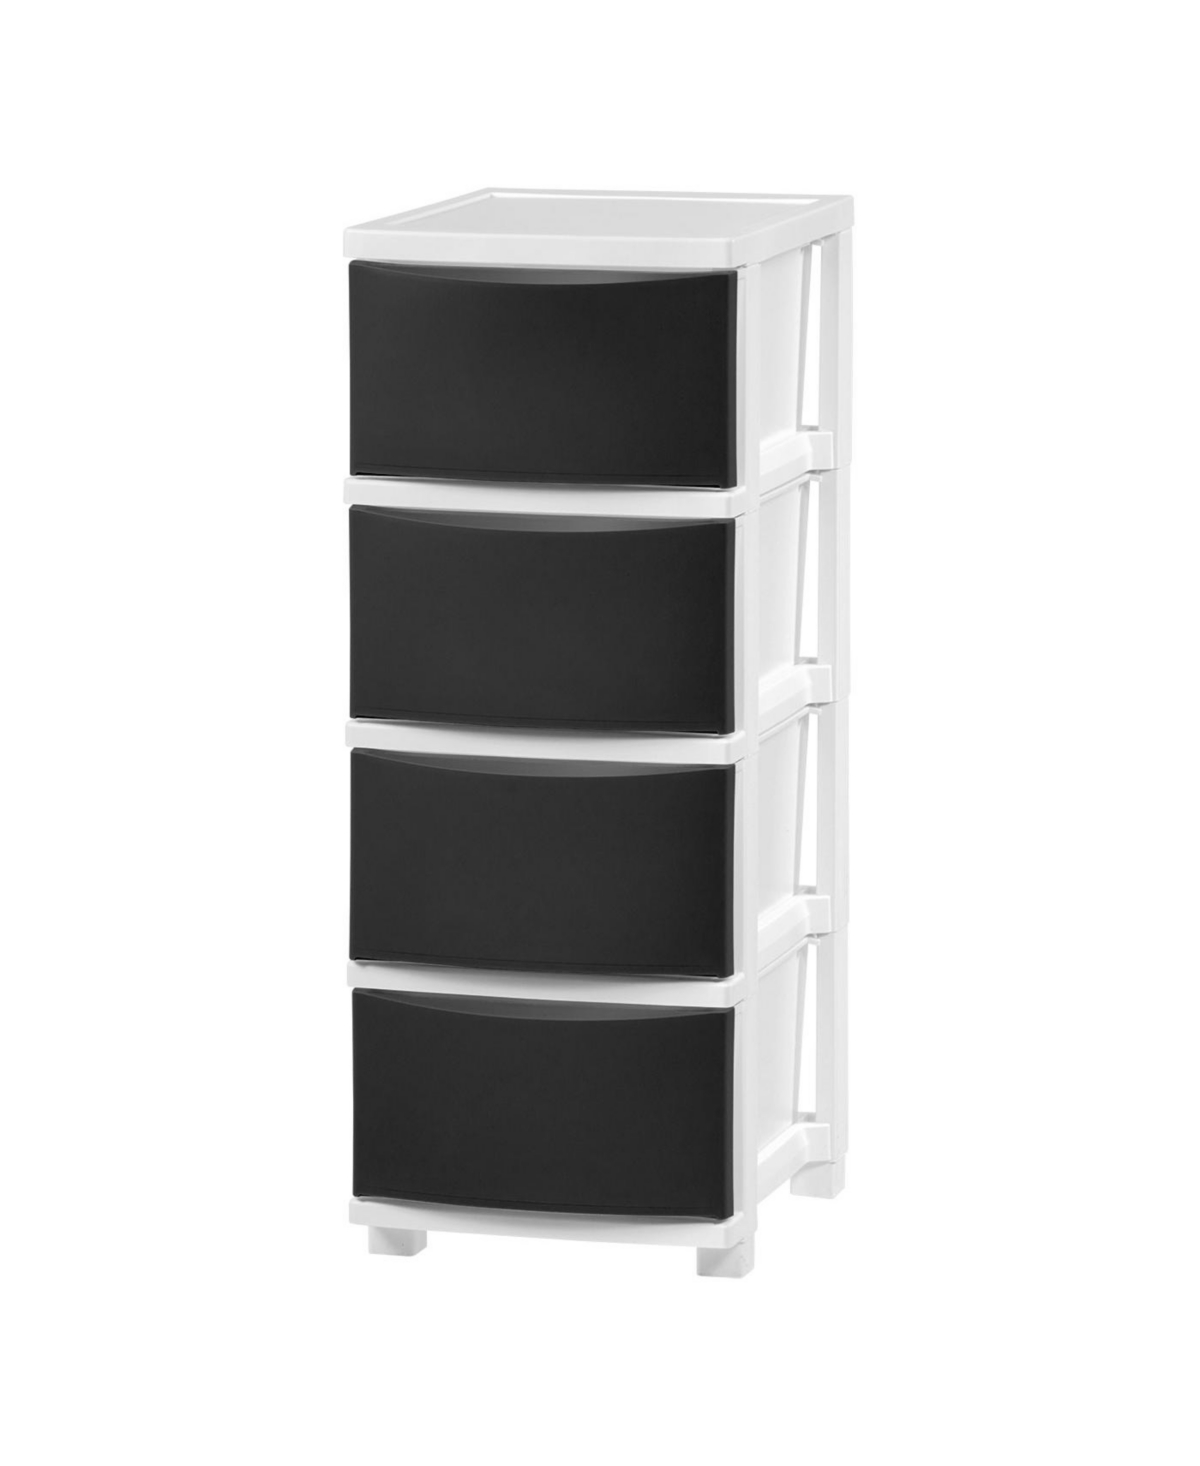 4 Slim Plastic Drawer Storage with Casters, White/Black - Black